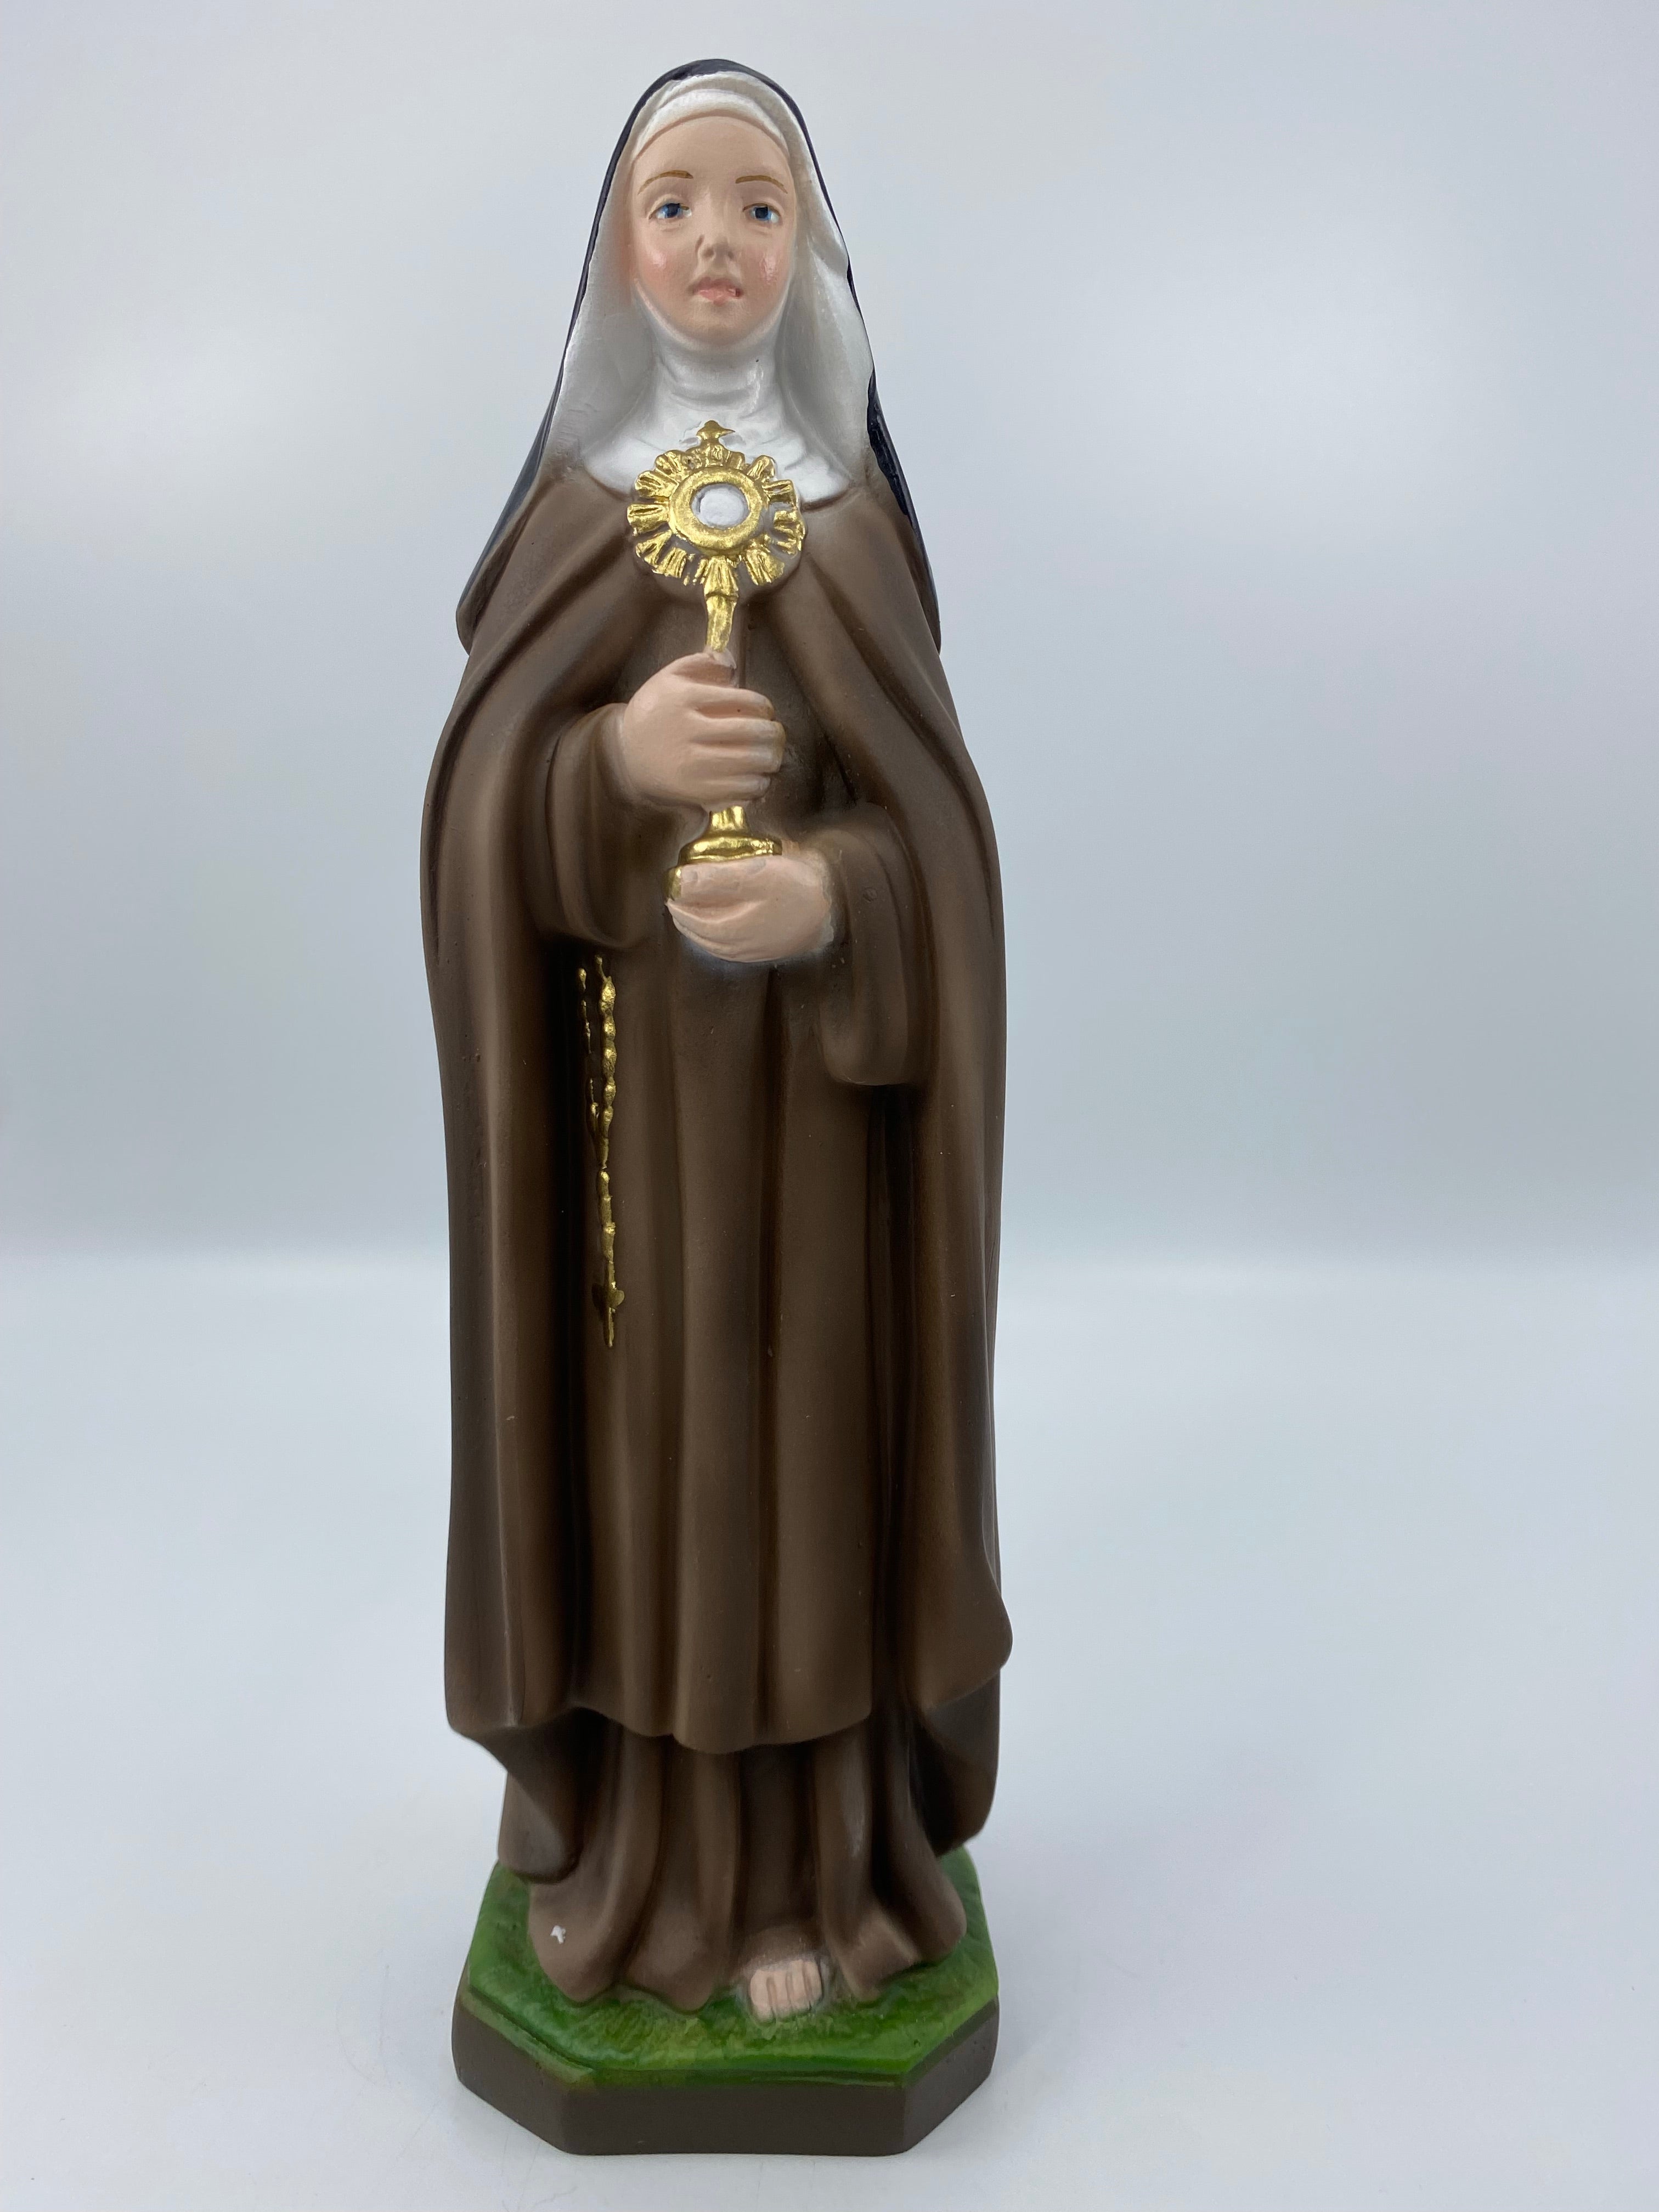 The Faith Gift  Shop Saint Clare  statue - Hand Painted in Italy - Our Tuscany Collection -Estatua de Santa Clara